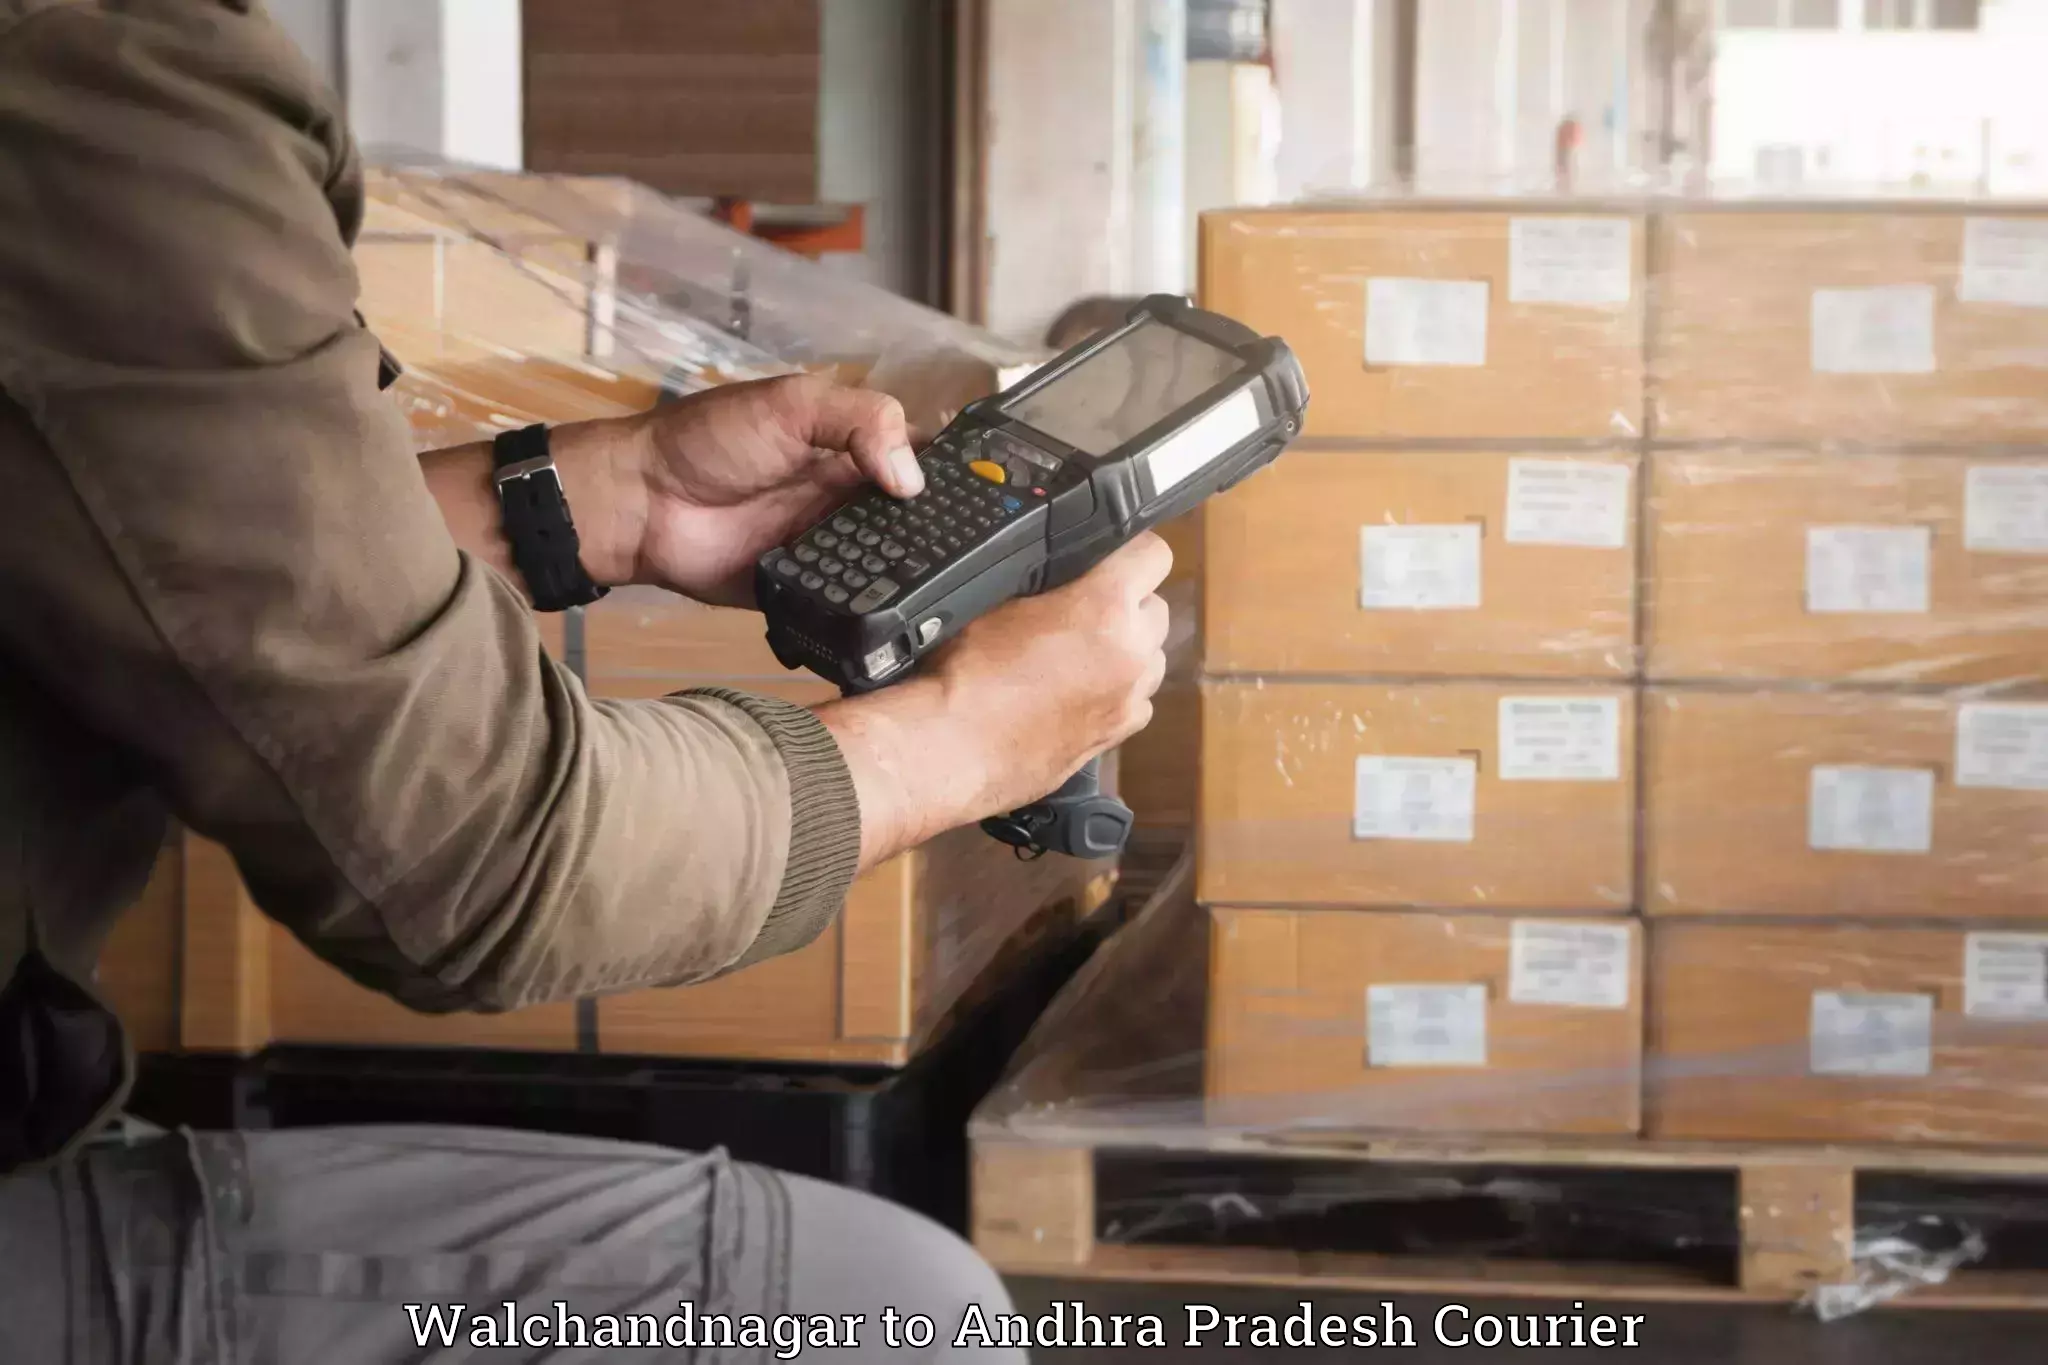 Luggage delivery network Walchandnagar to Chandragiri